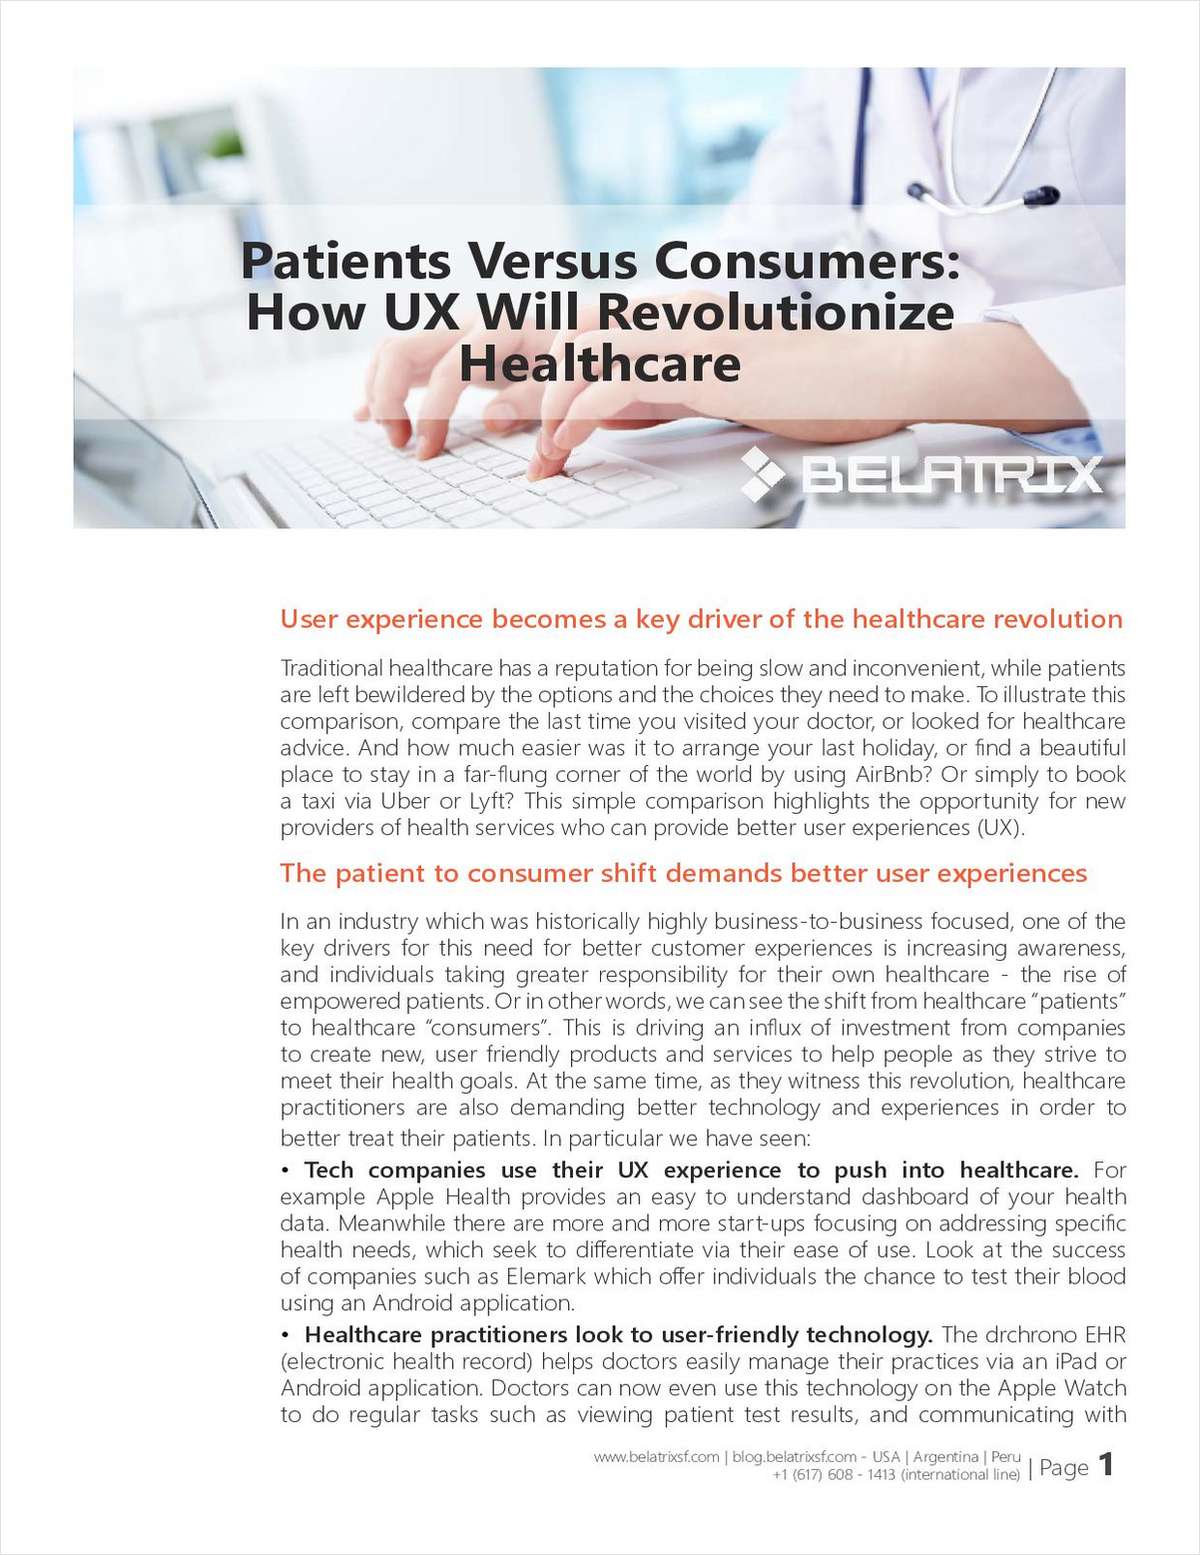 Patients Versus Consumers: How UX Will Revolutionize Healthcare